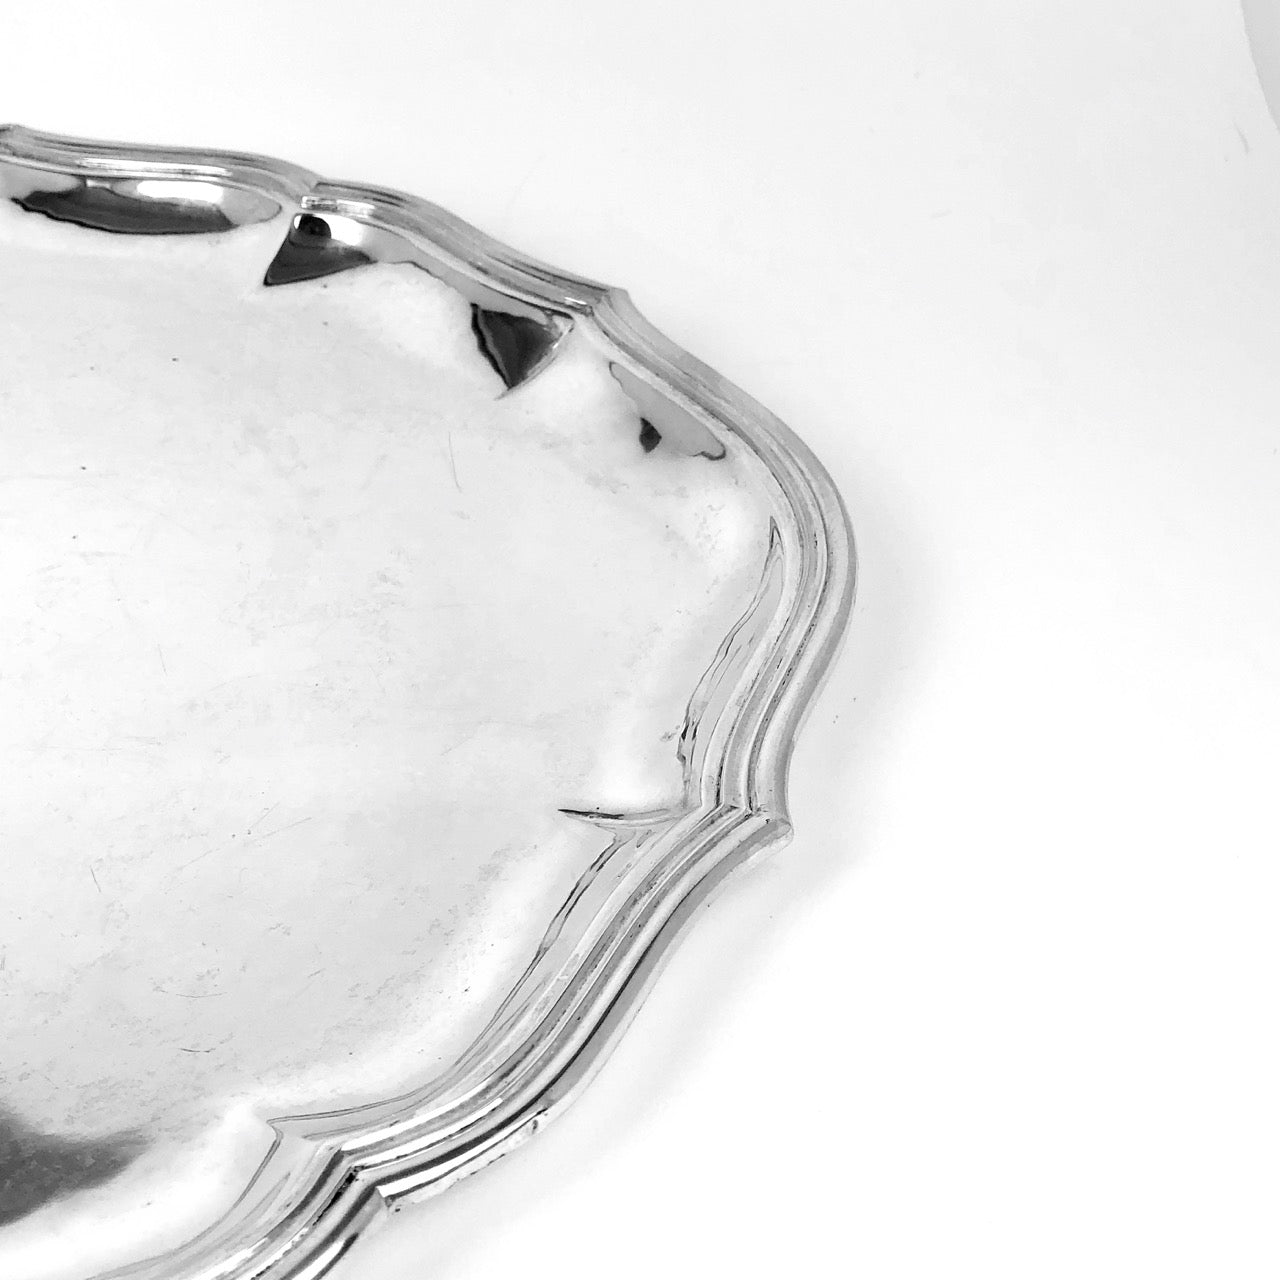 Vassoio ovale in argento 800 d'epoca bollo fascio littorio 1BS